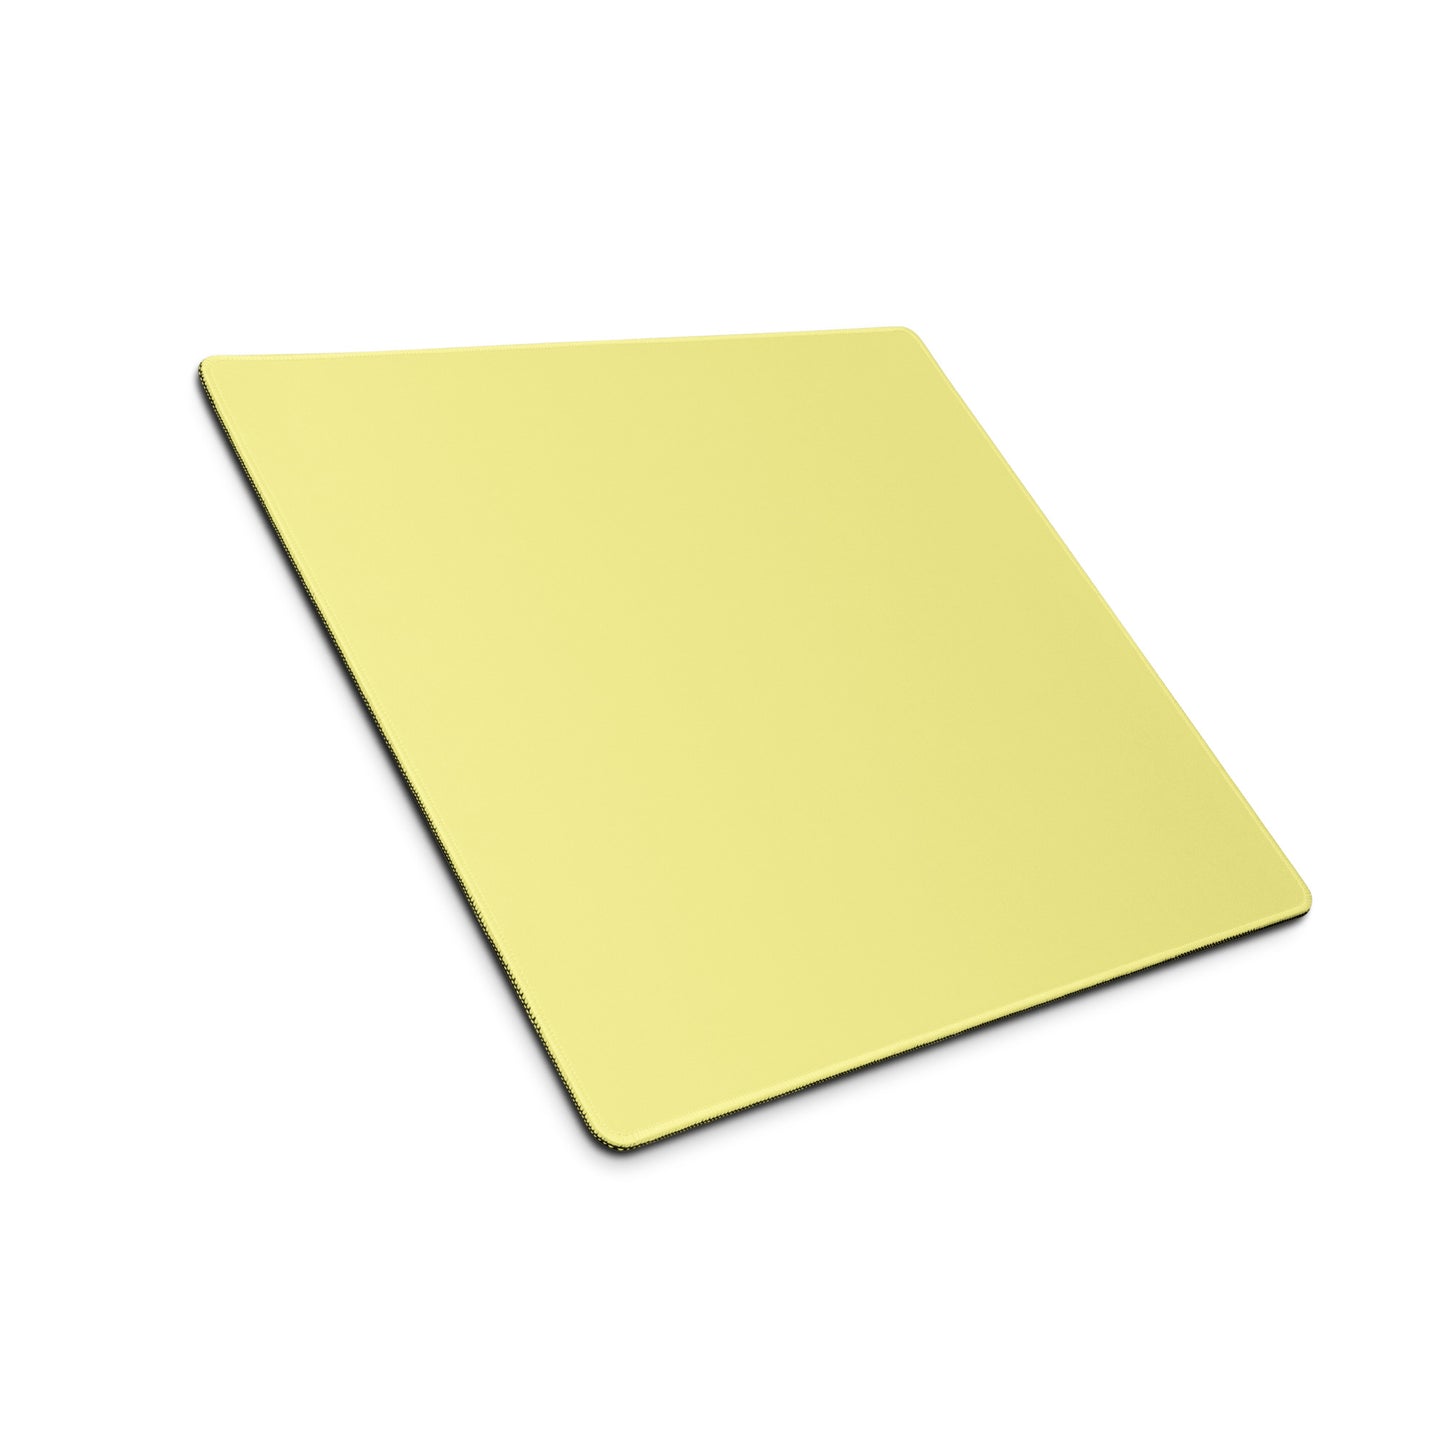 An 18" x 16" yellow gaming desk pad sitting at an angle.